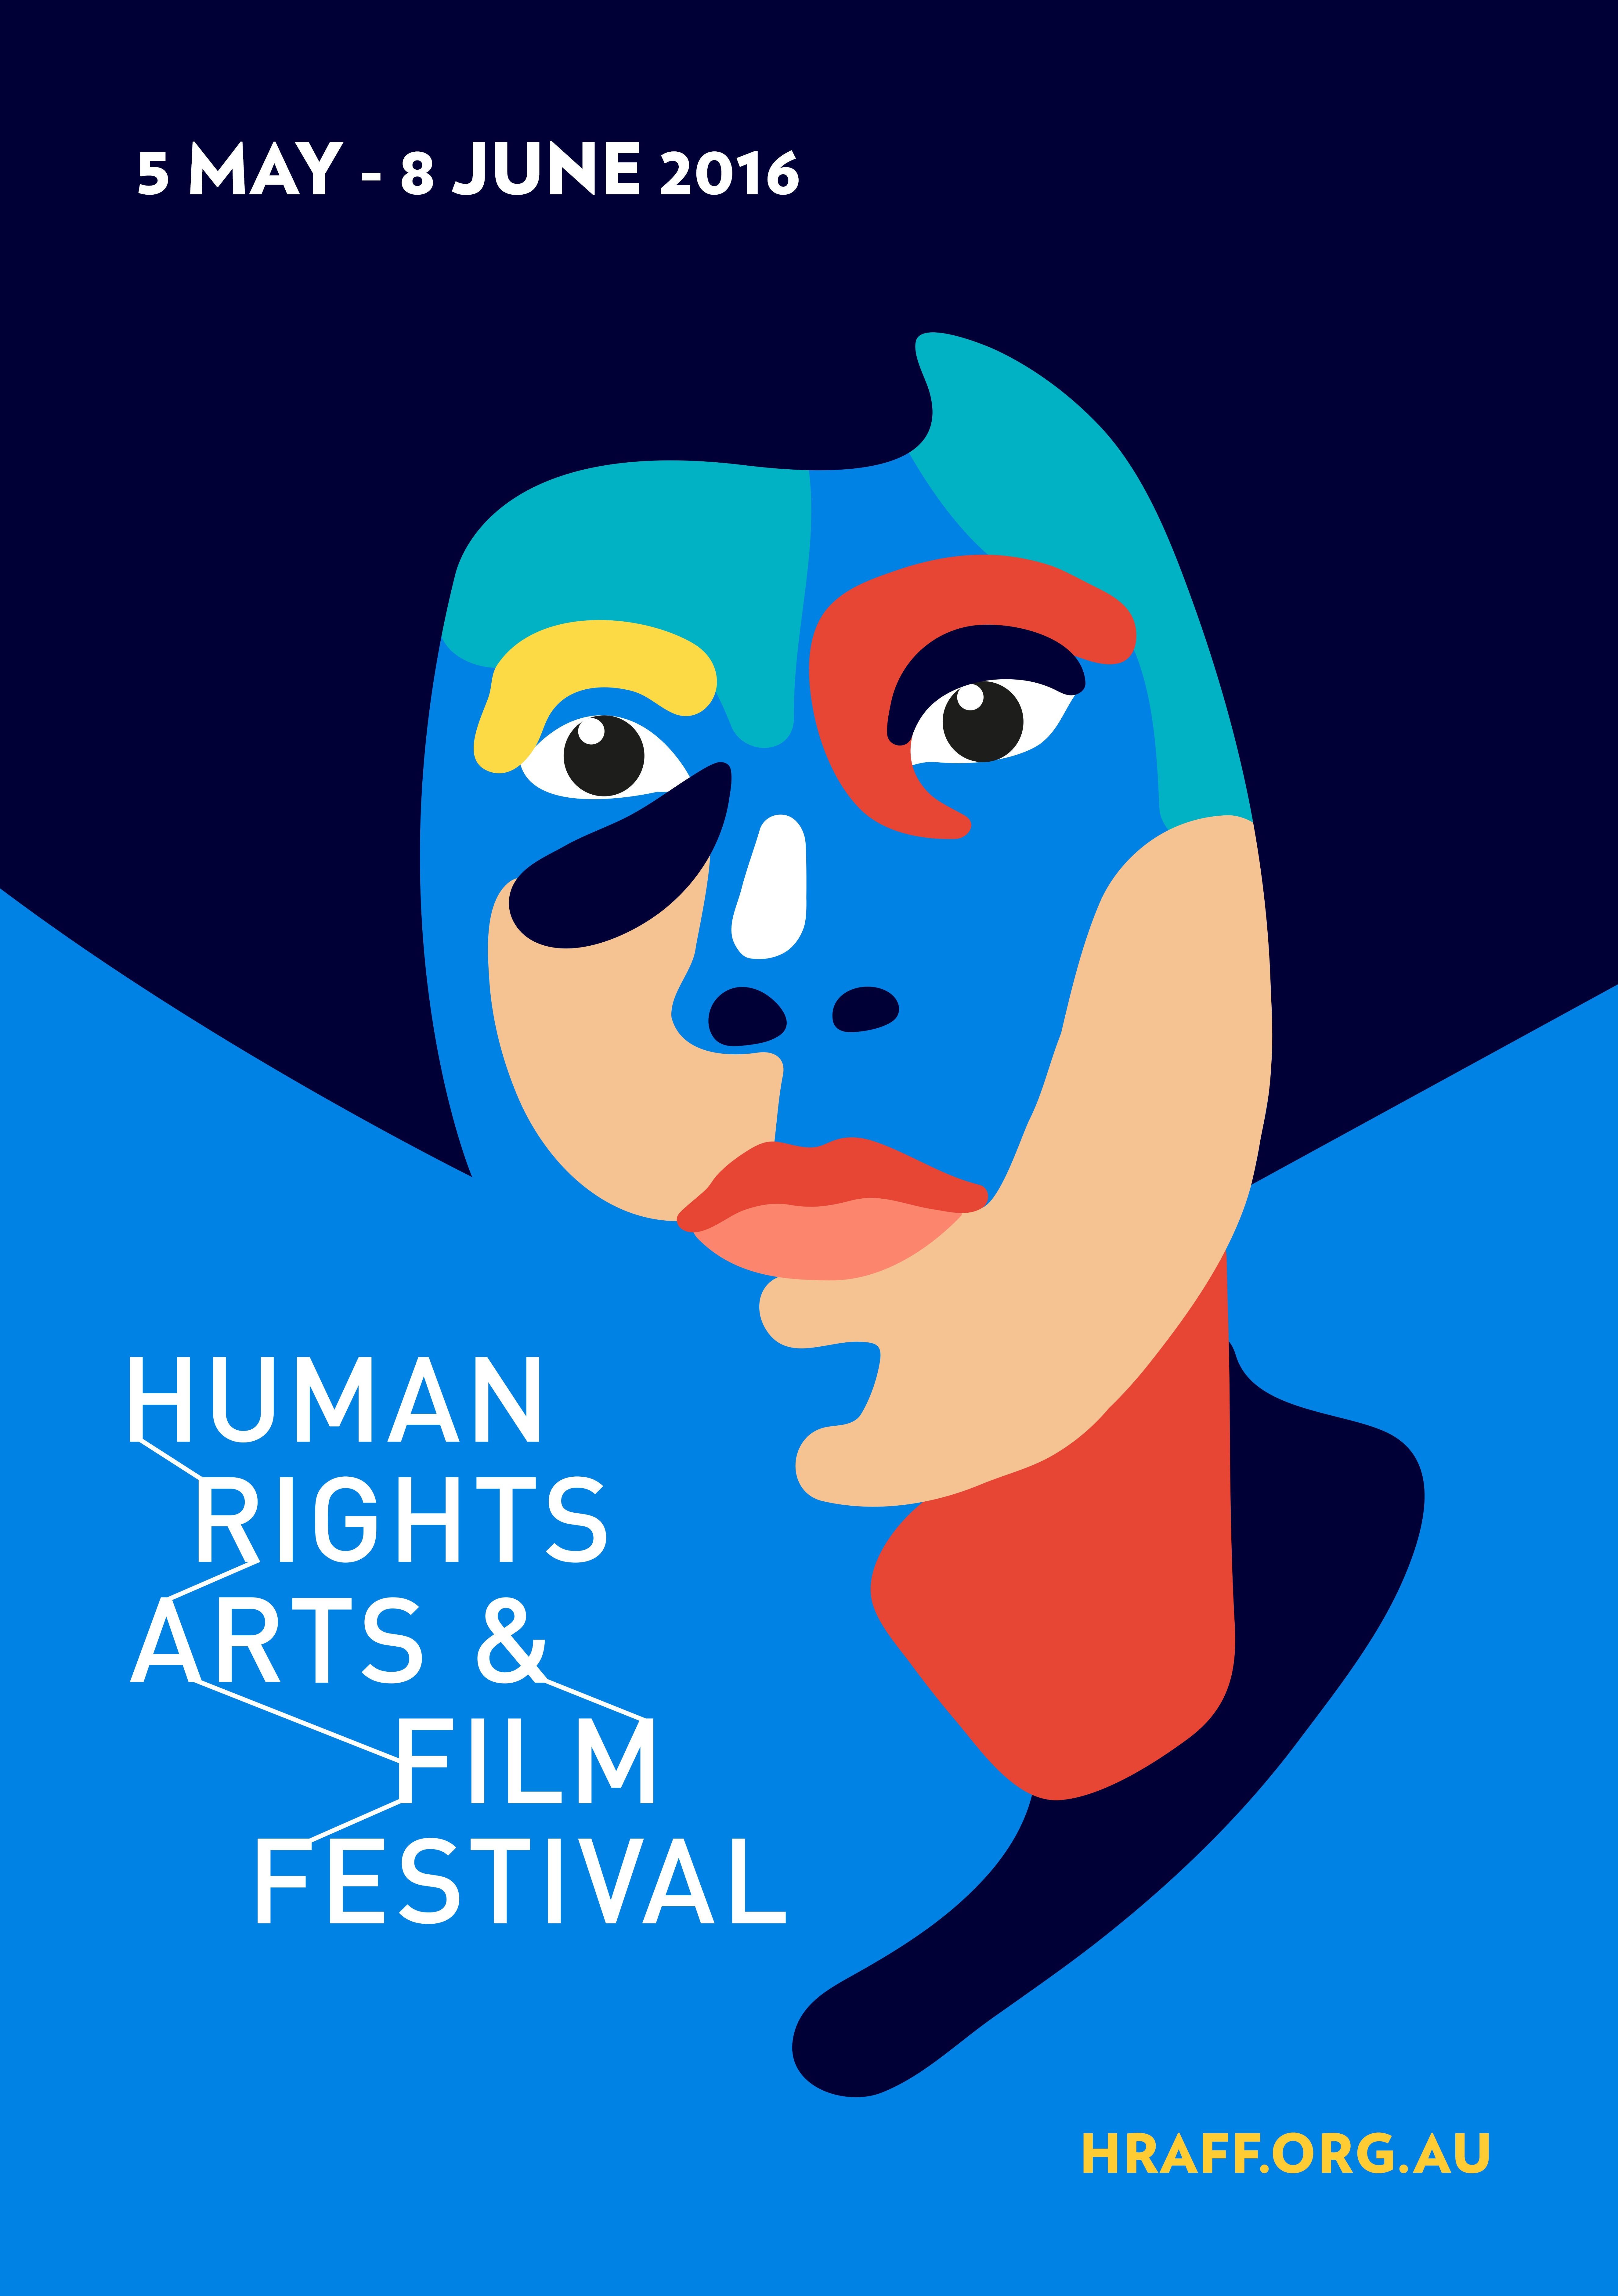 Human Rights film festival hire